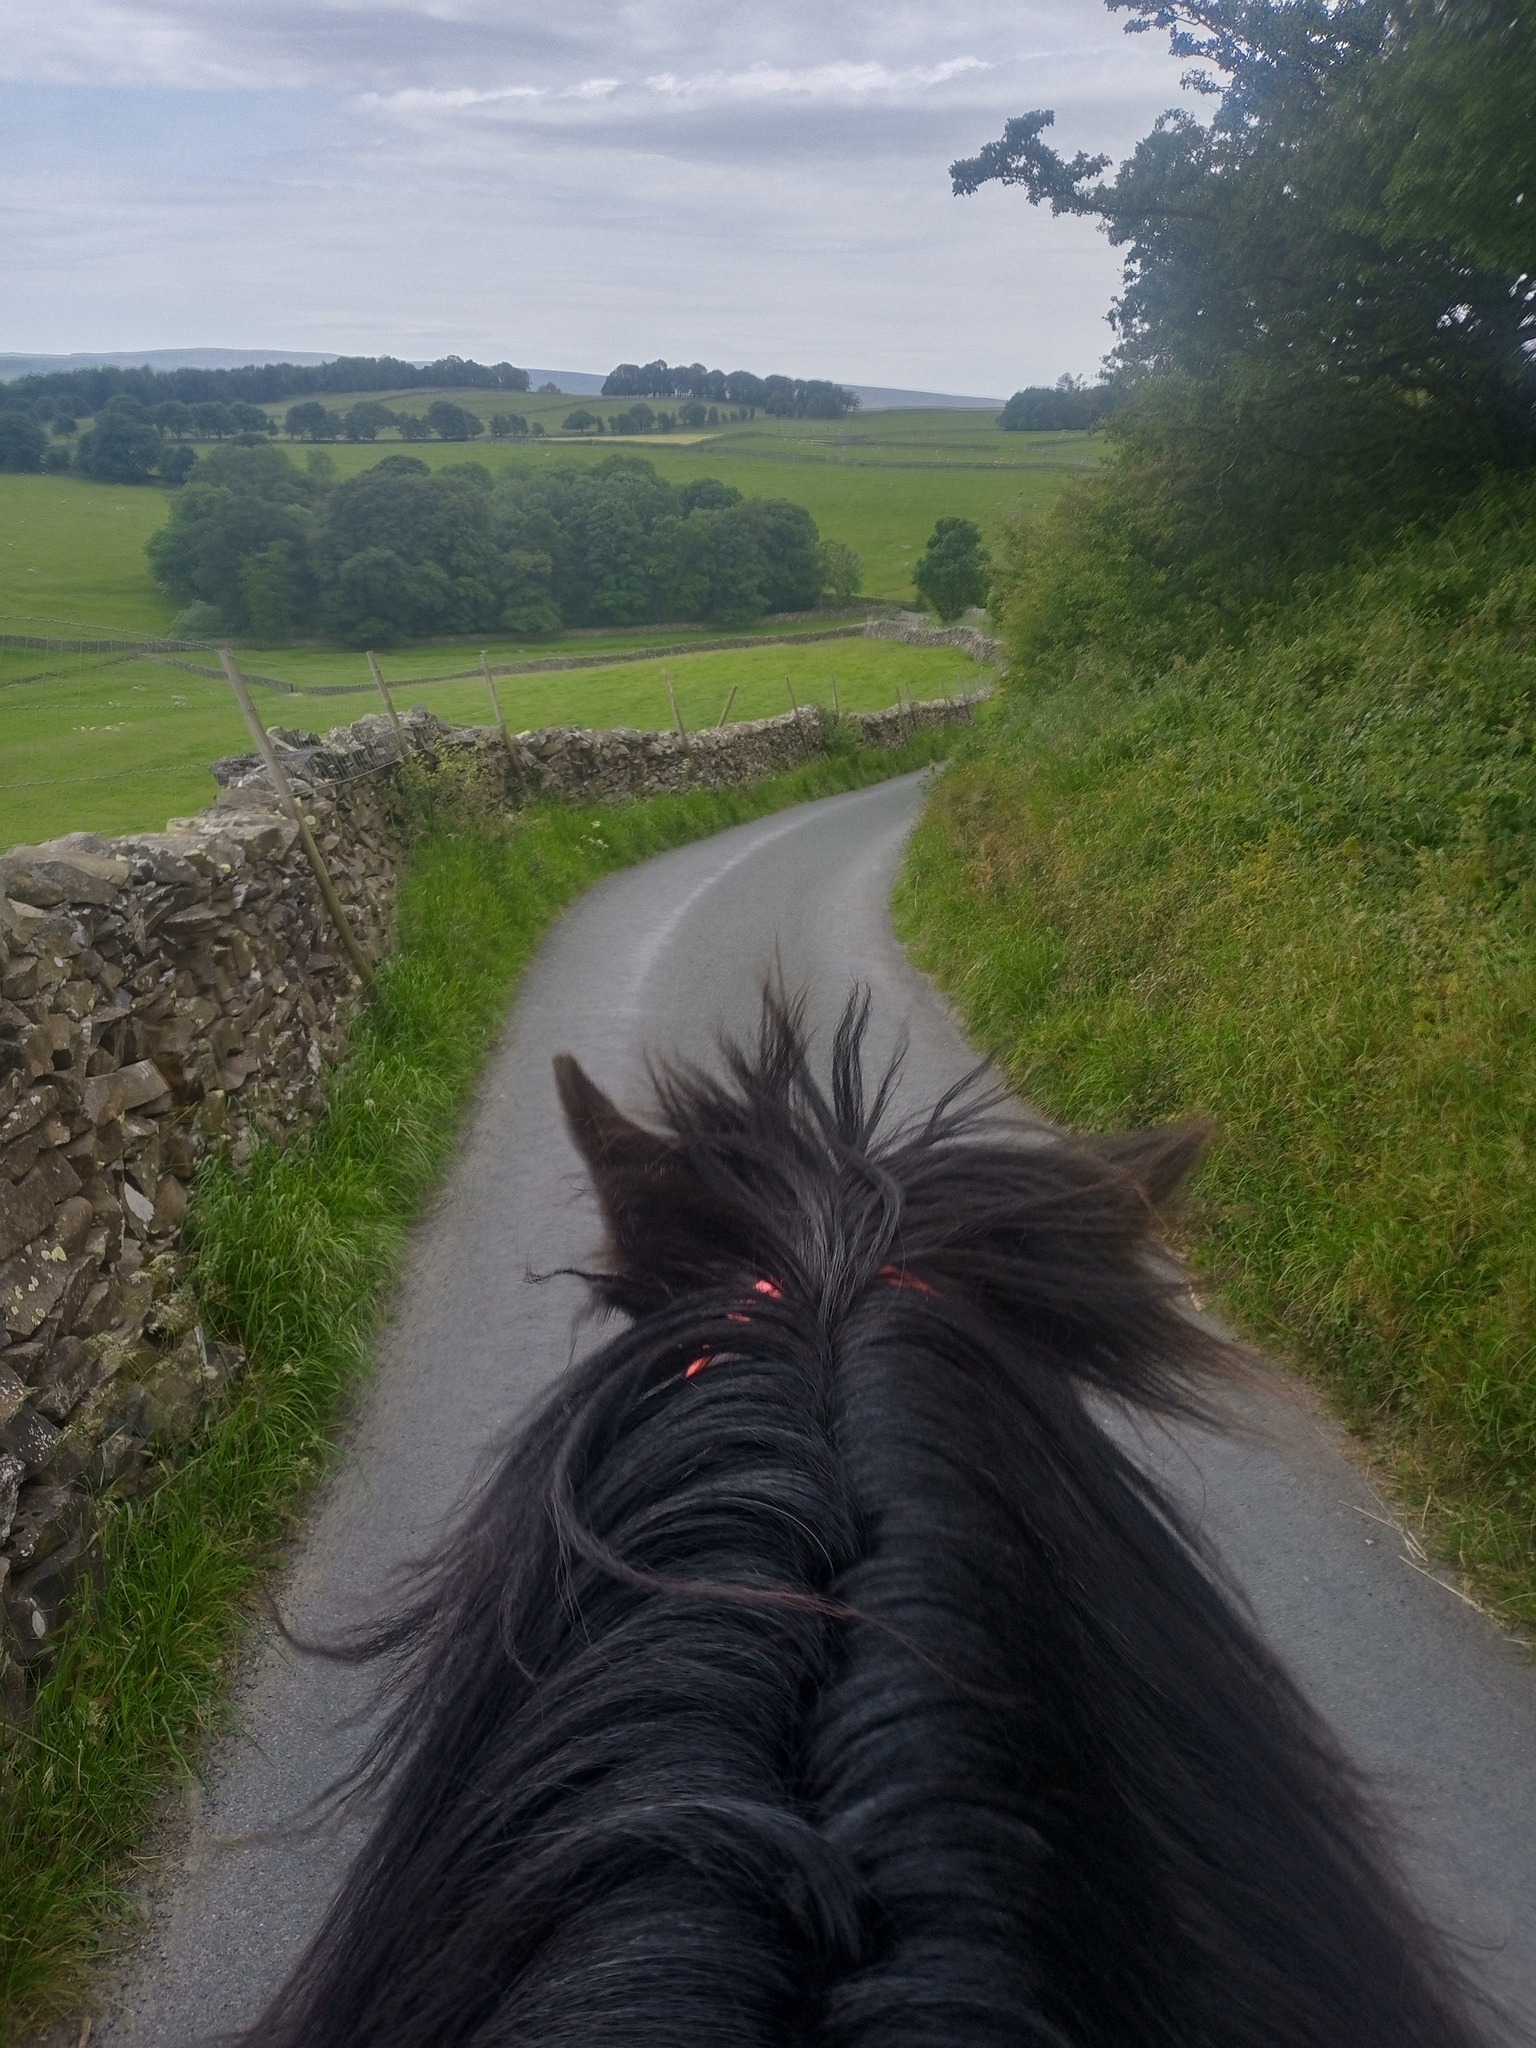 pony and road ahead